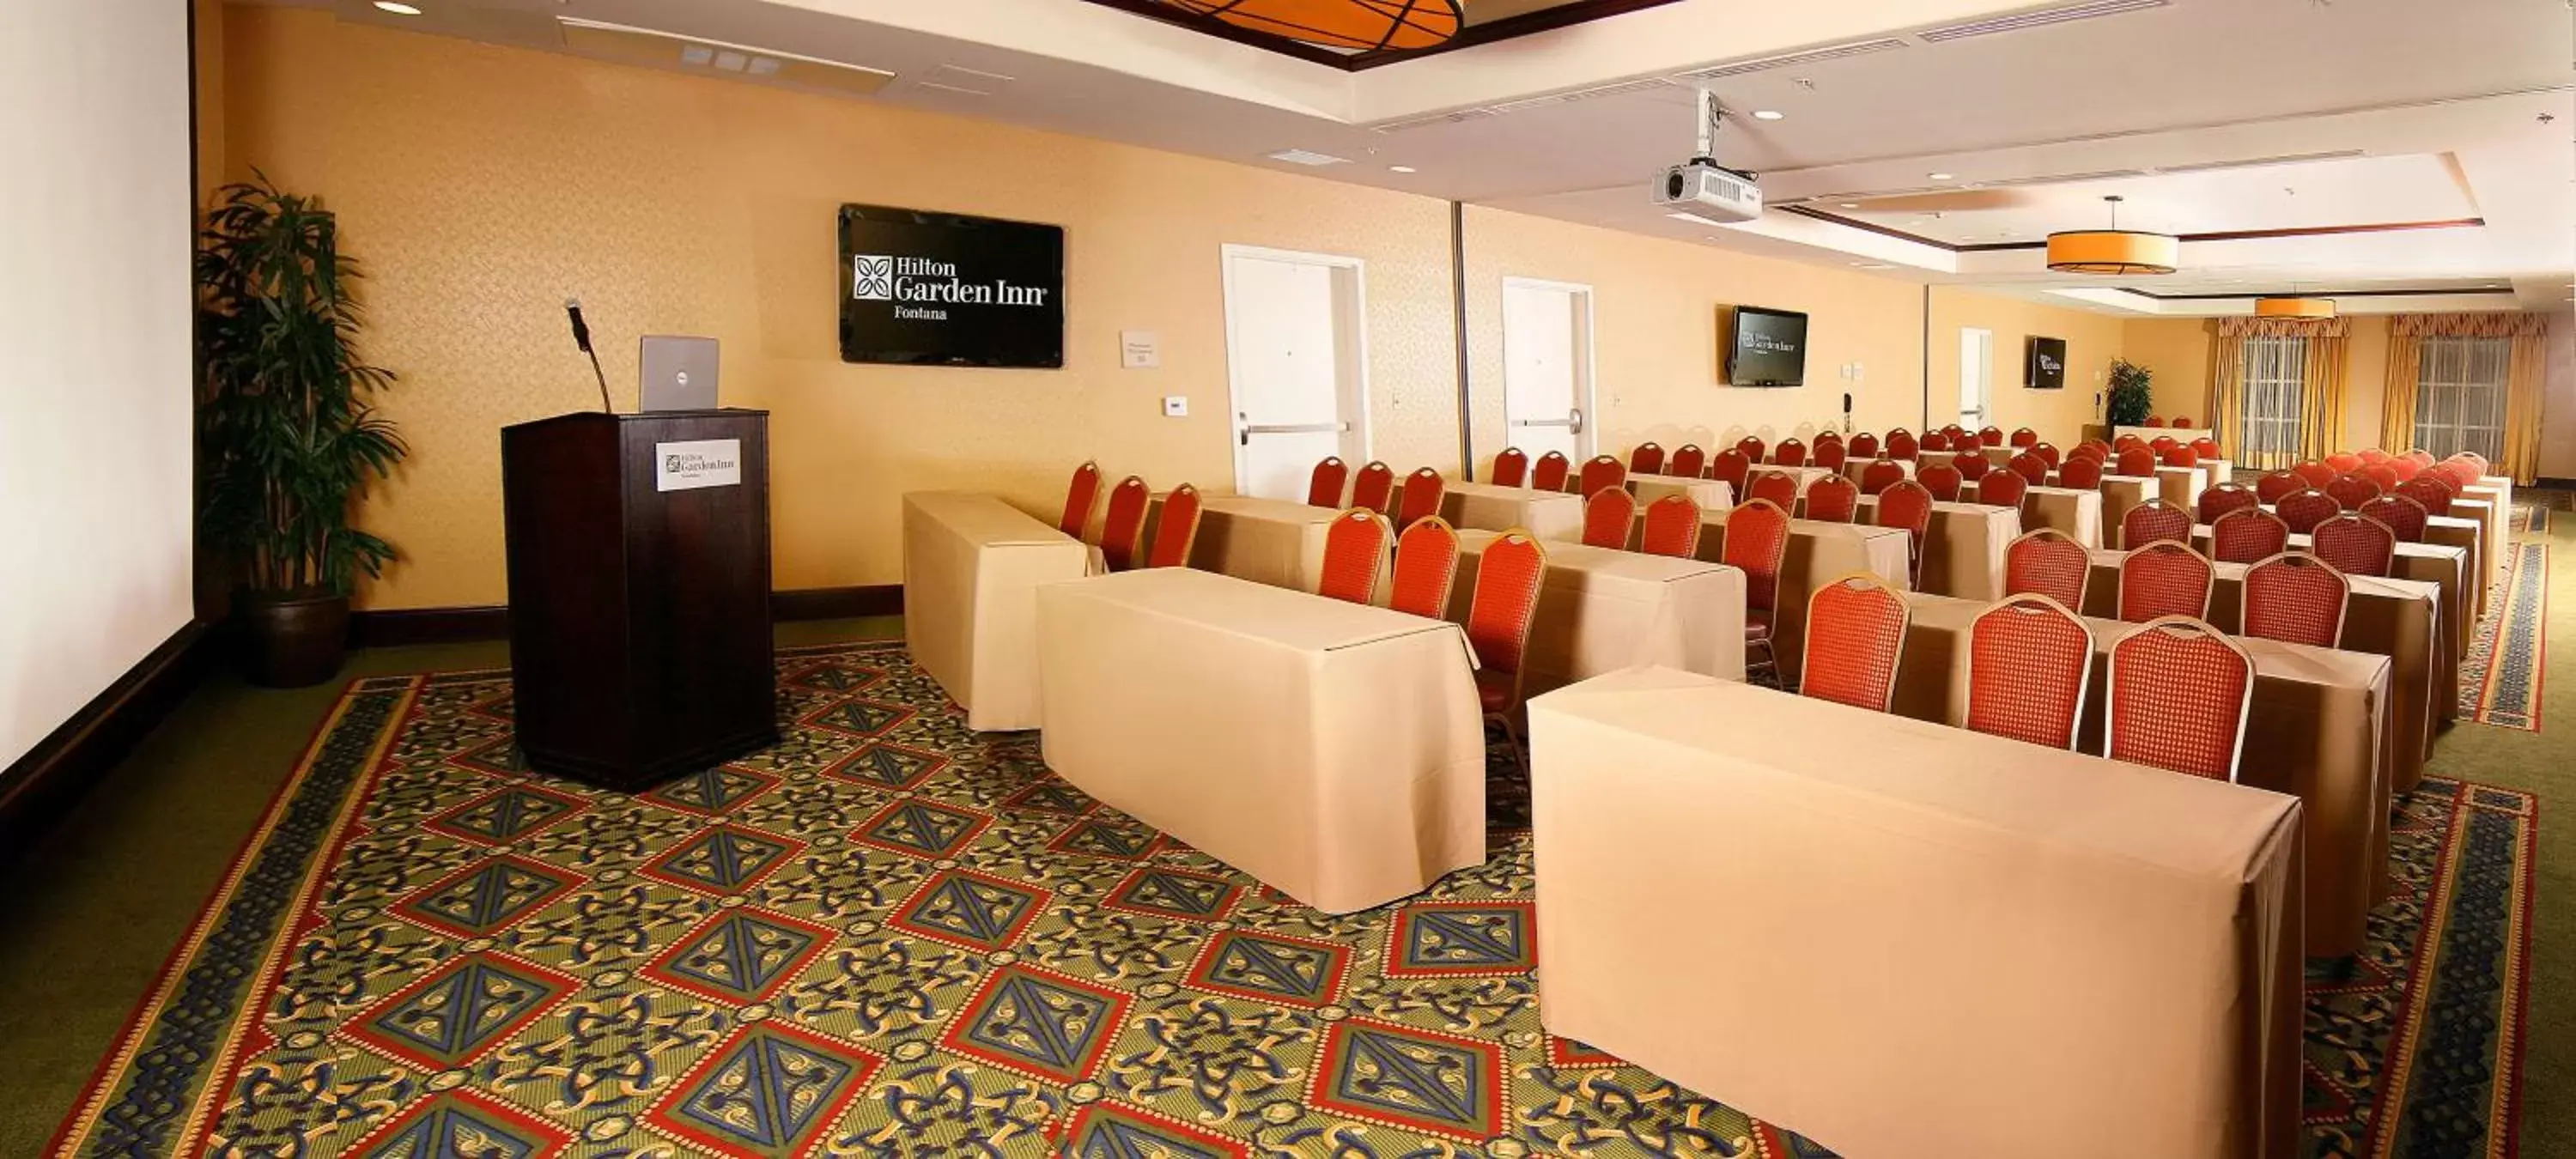 Meeting/conference room in Hilton Garden Inn Fontana